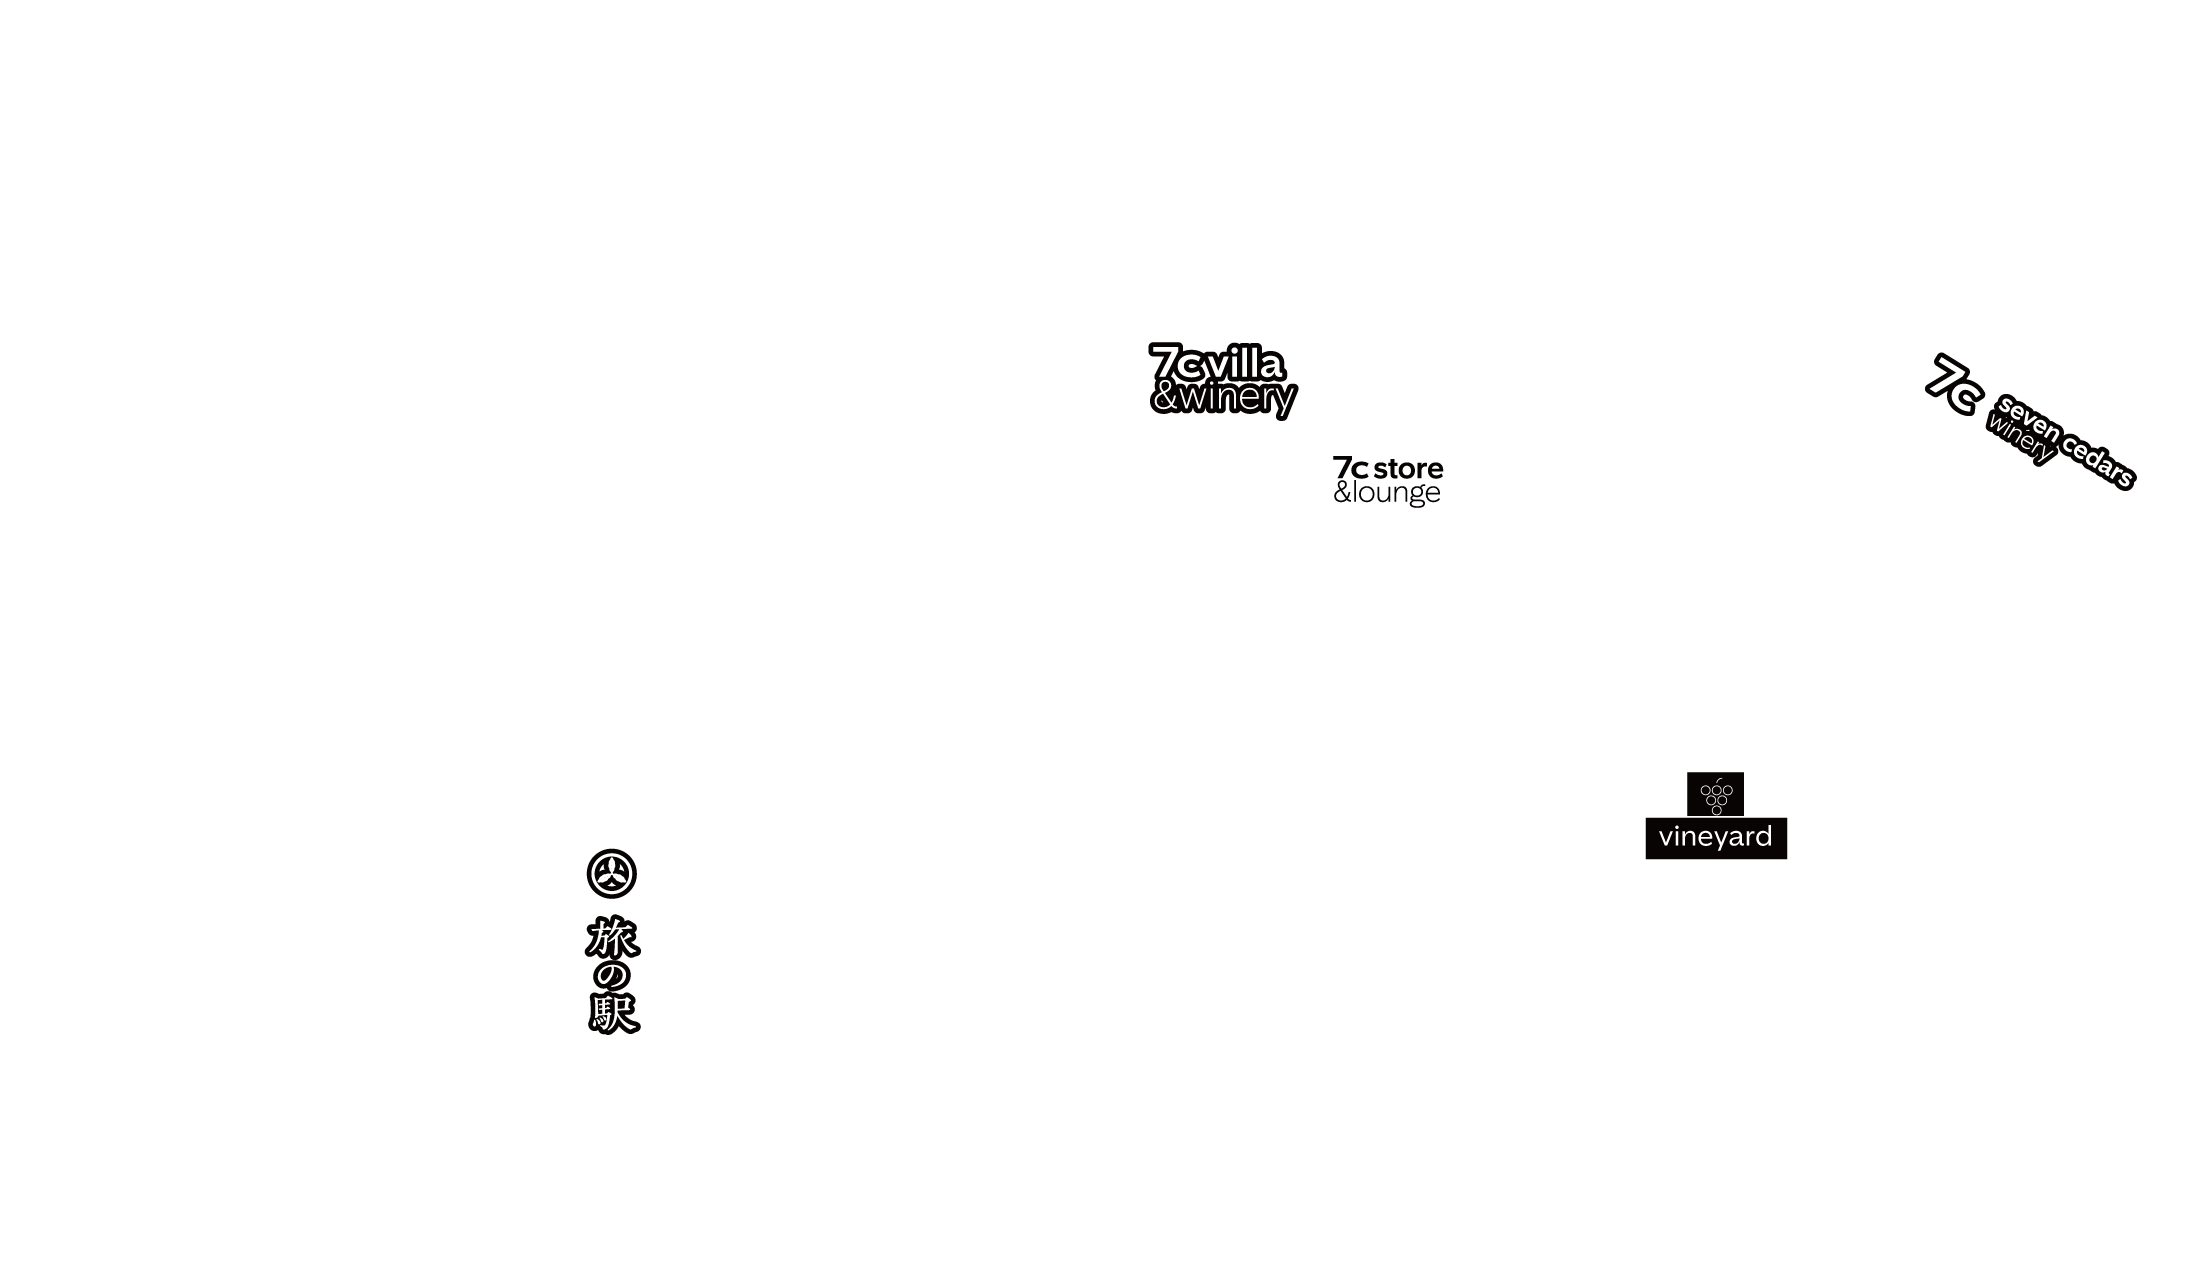 7c area map